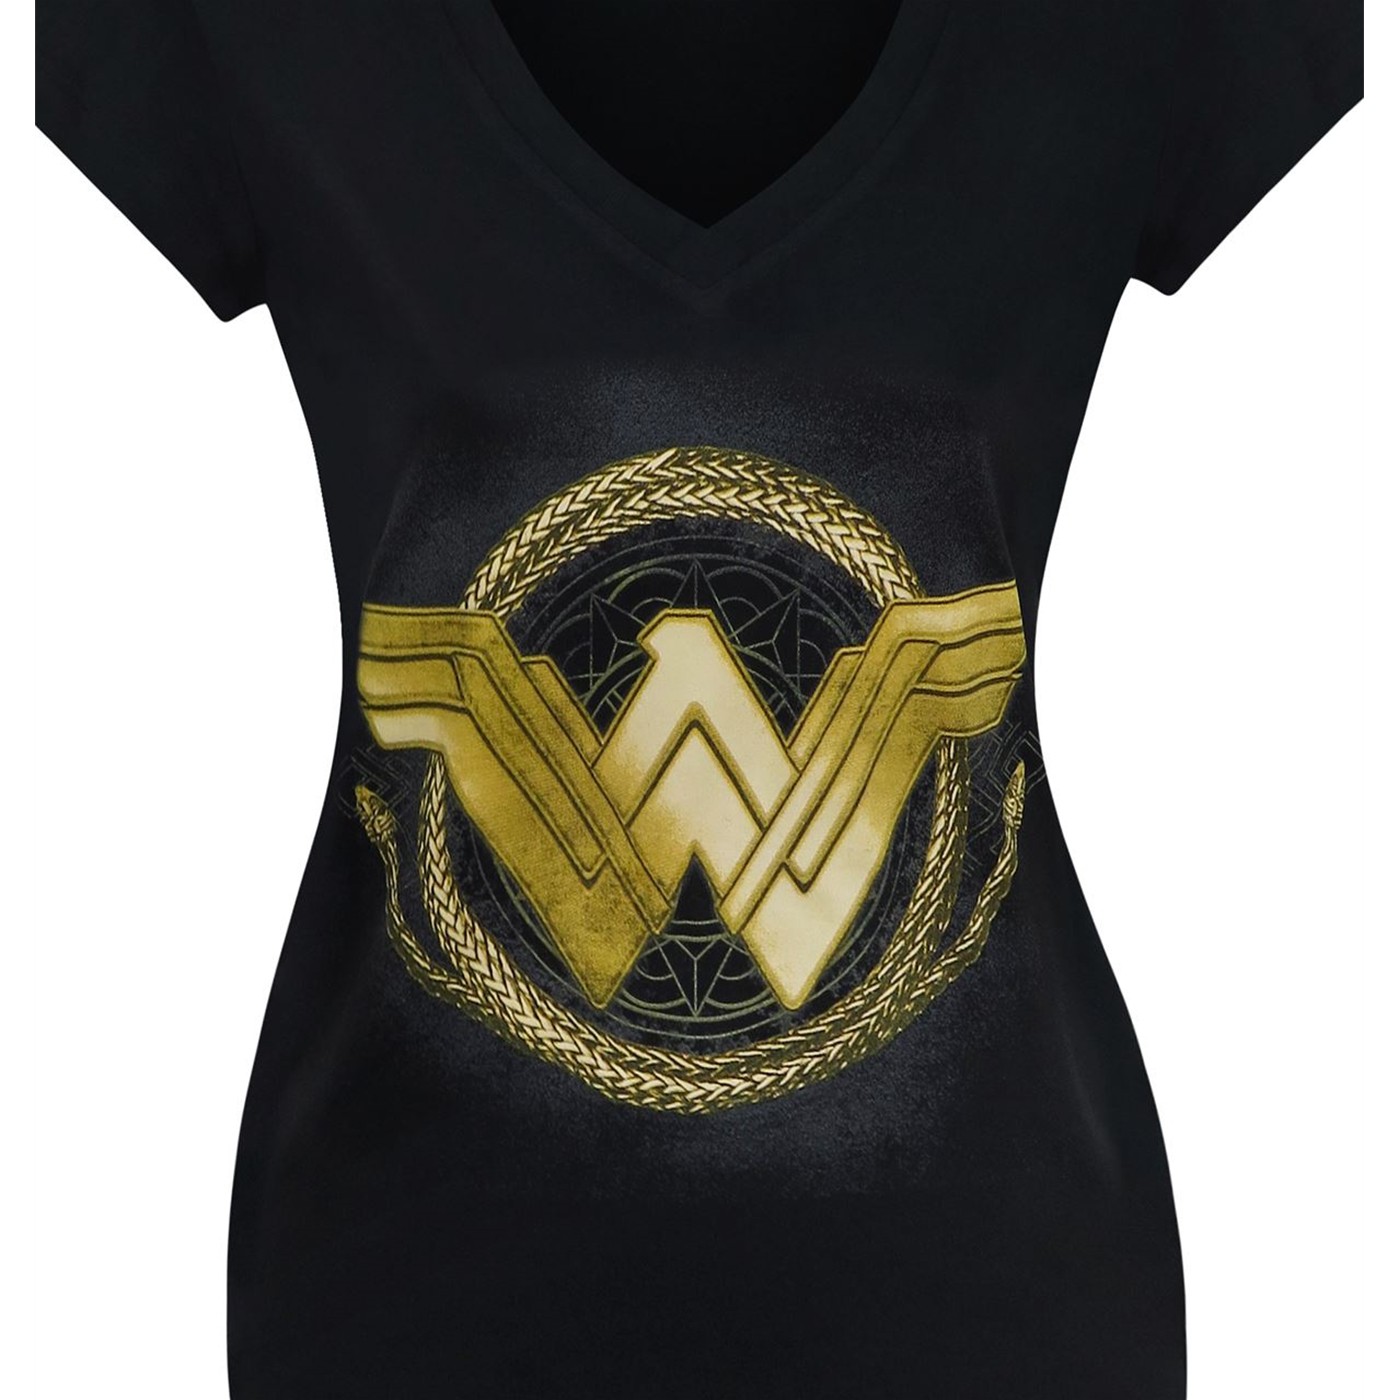 Wonder Woman Movie Golden Lasso Women's V-Neck T-Shirt